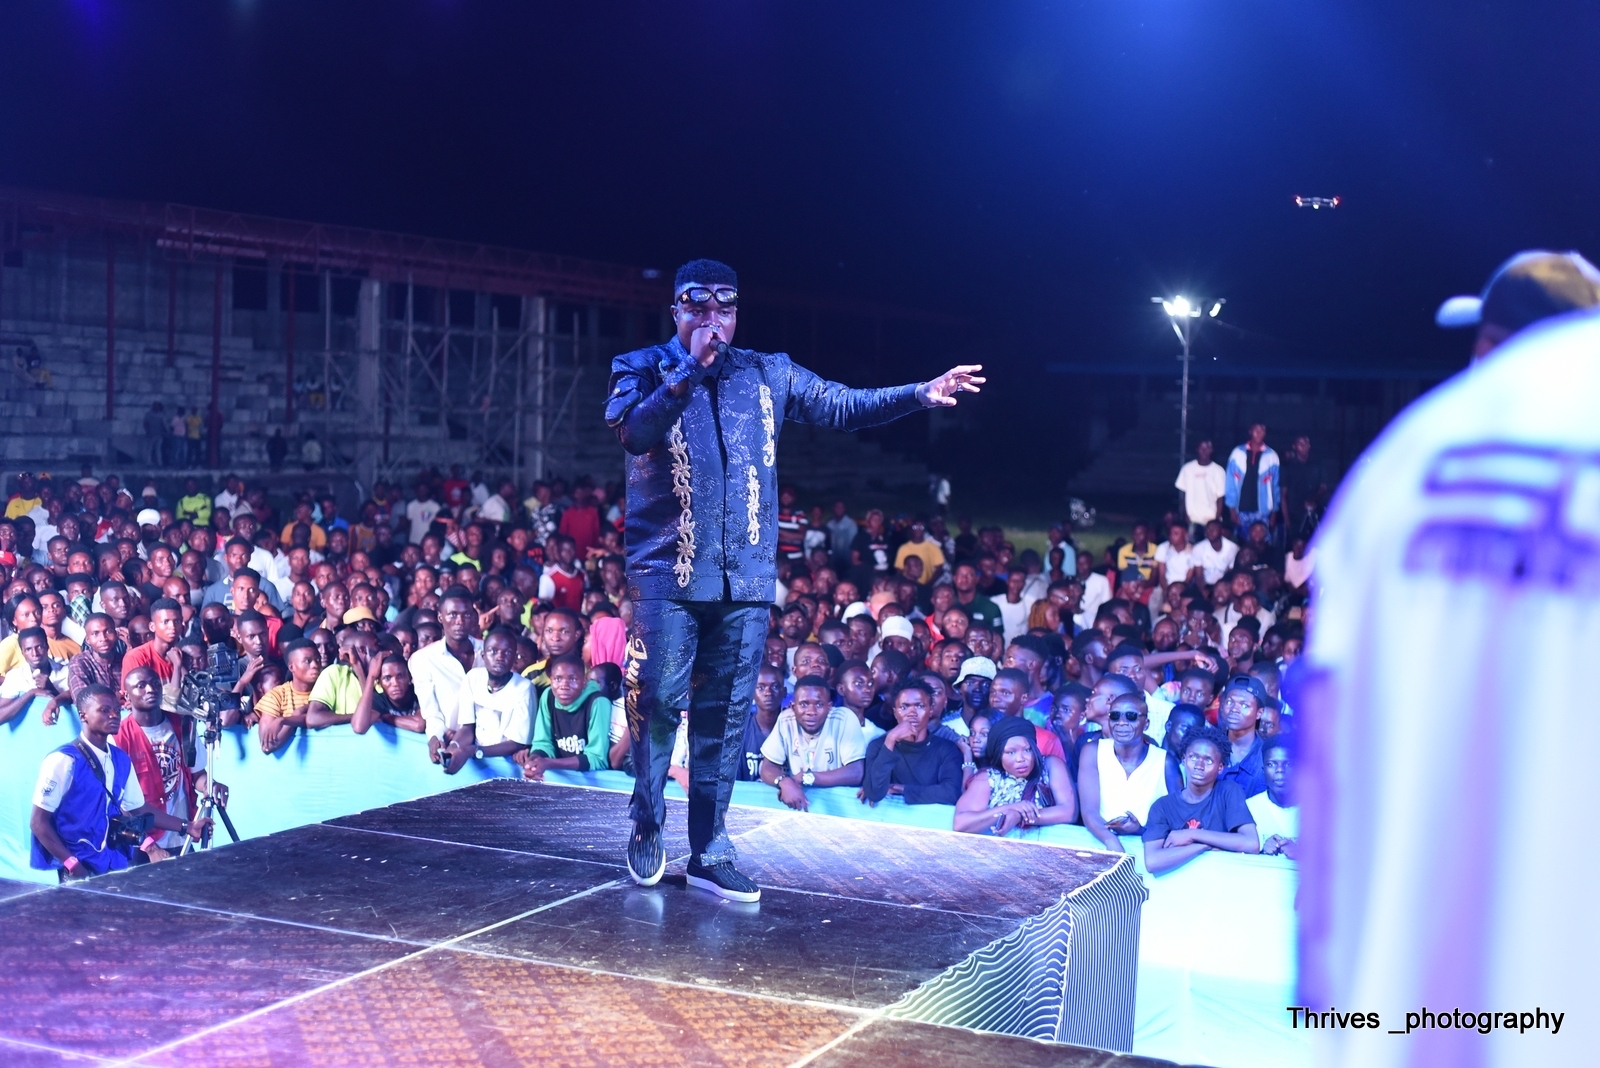 Jumabee performing at his Concert held in Lokoja, Kogi State